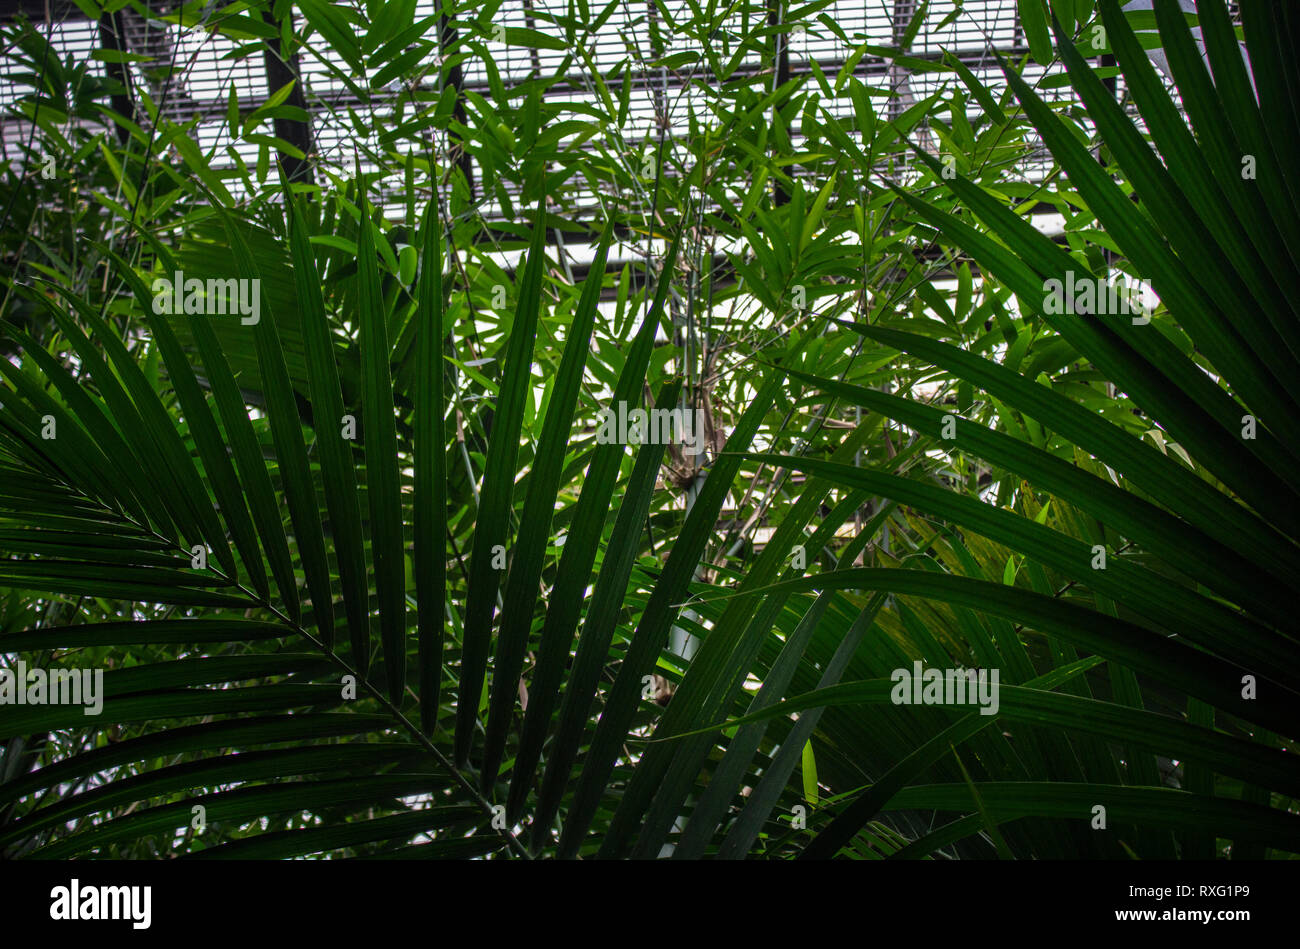 Glasgow Botanical Gardens - Close up of large thin green leaves Stock Photo